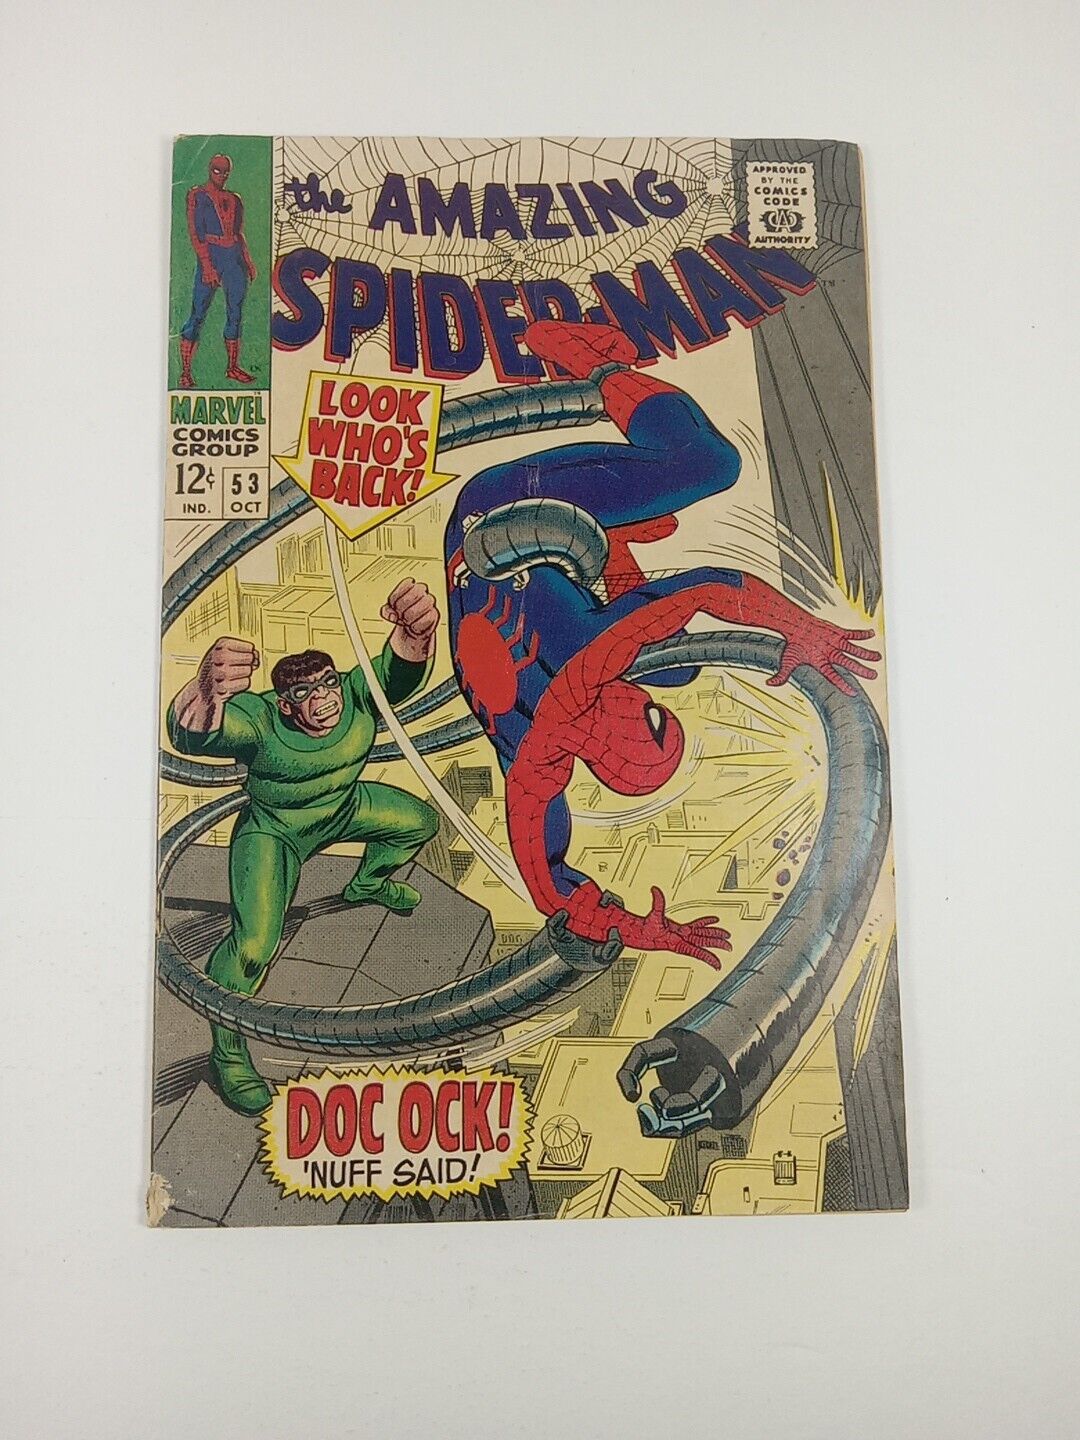 Amazing Spider-Man #53 (1967) Doctor Octopus Mid Grade Silver Age Marvel Comics